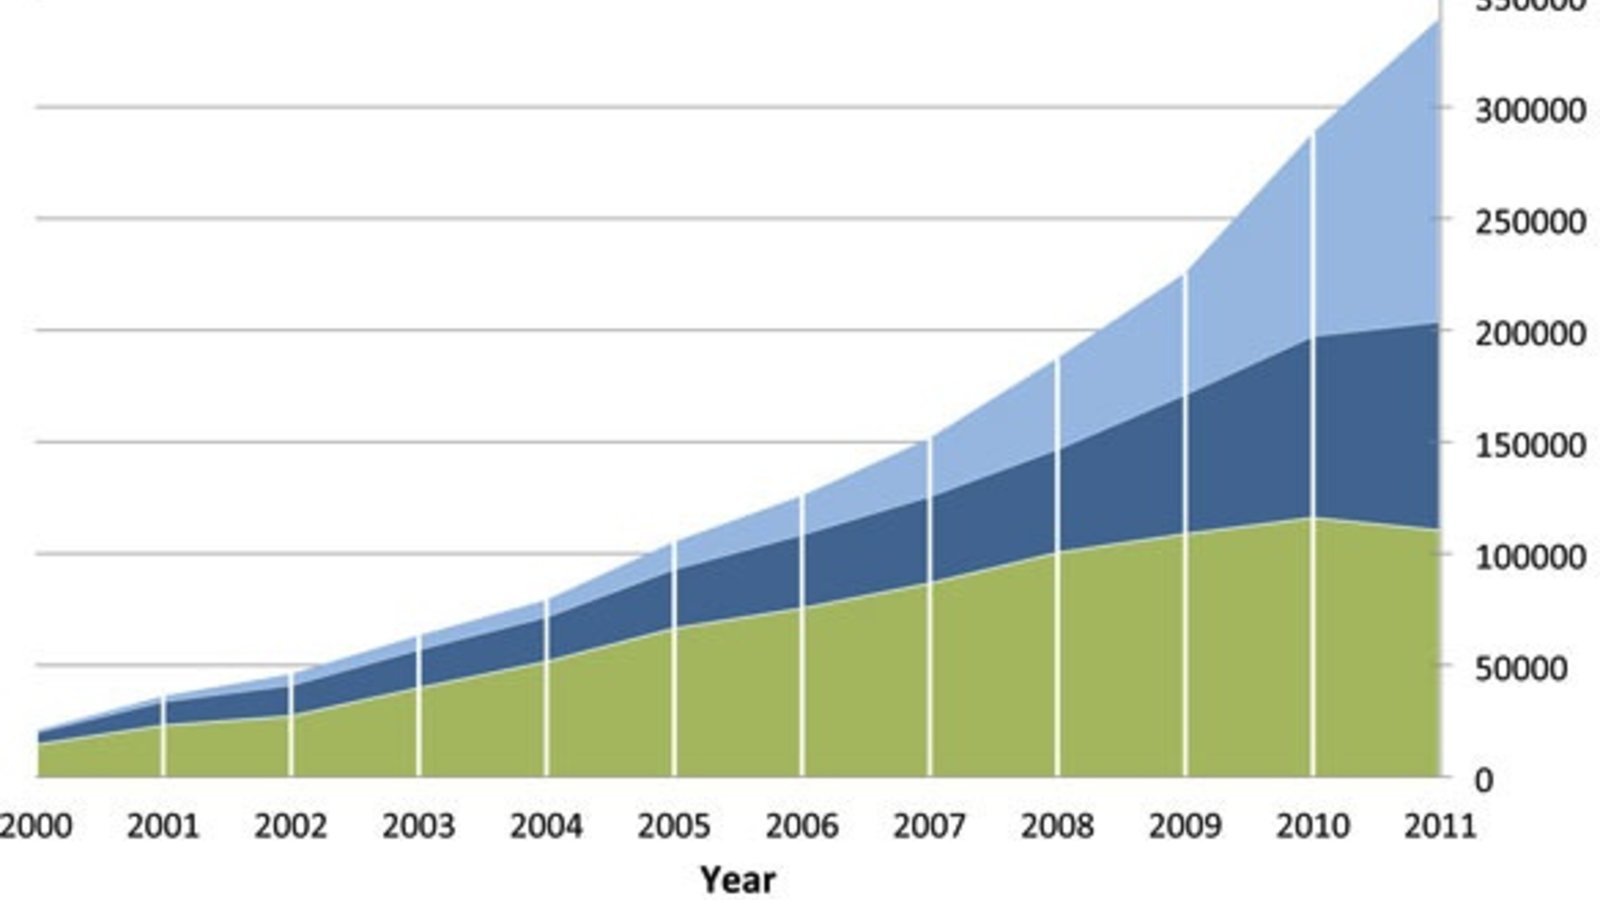 acceslibre-croissance2000-2011.jpg